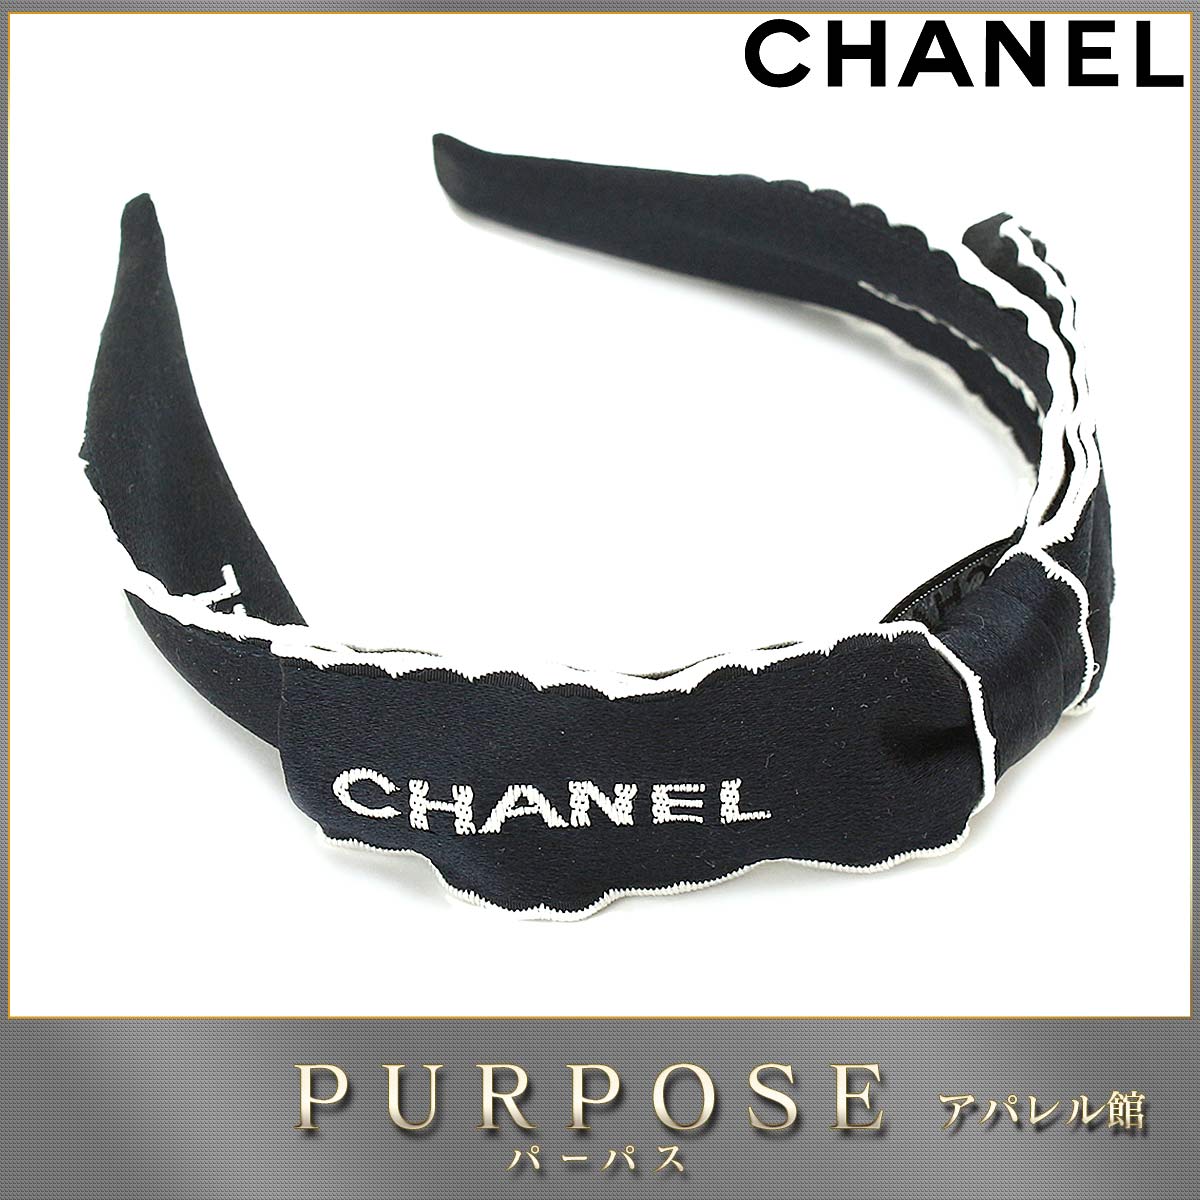 White Chanel Logo - Purpose Inc: Chanel CHANEL logo ribbon headband satin black white ...